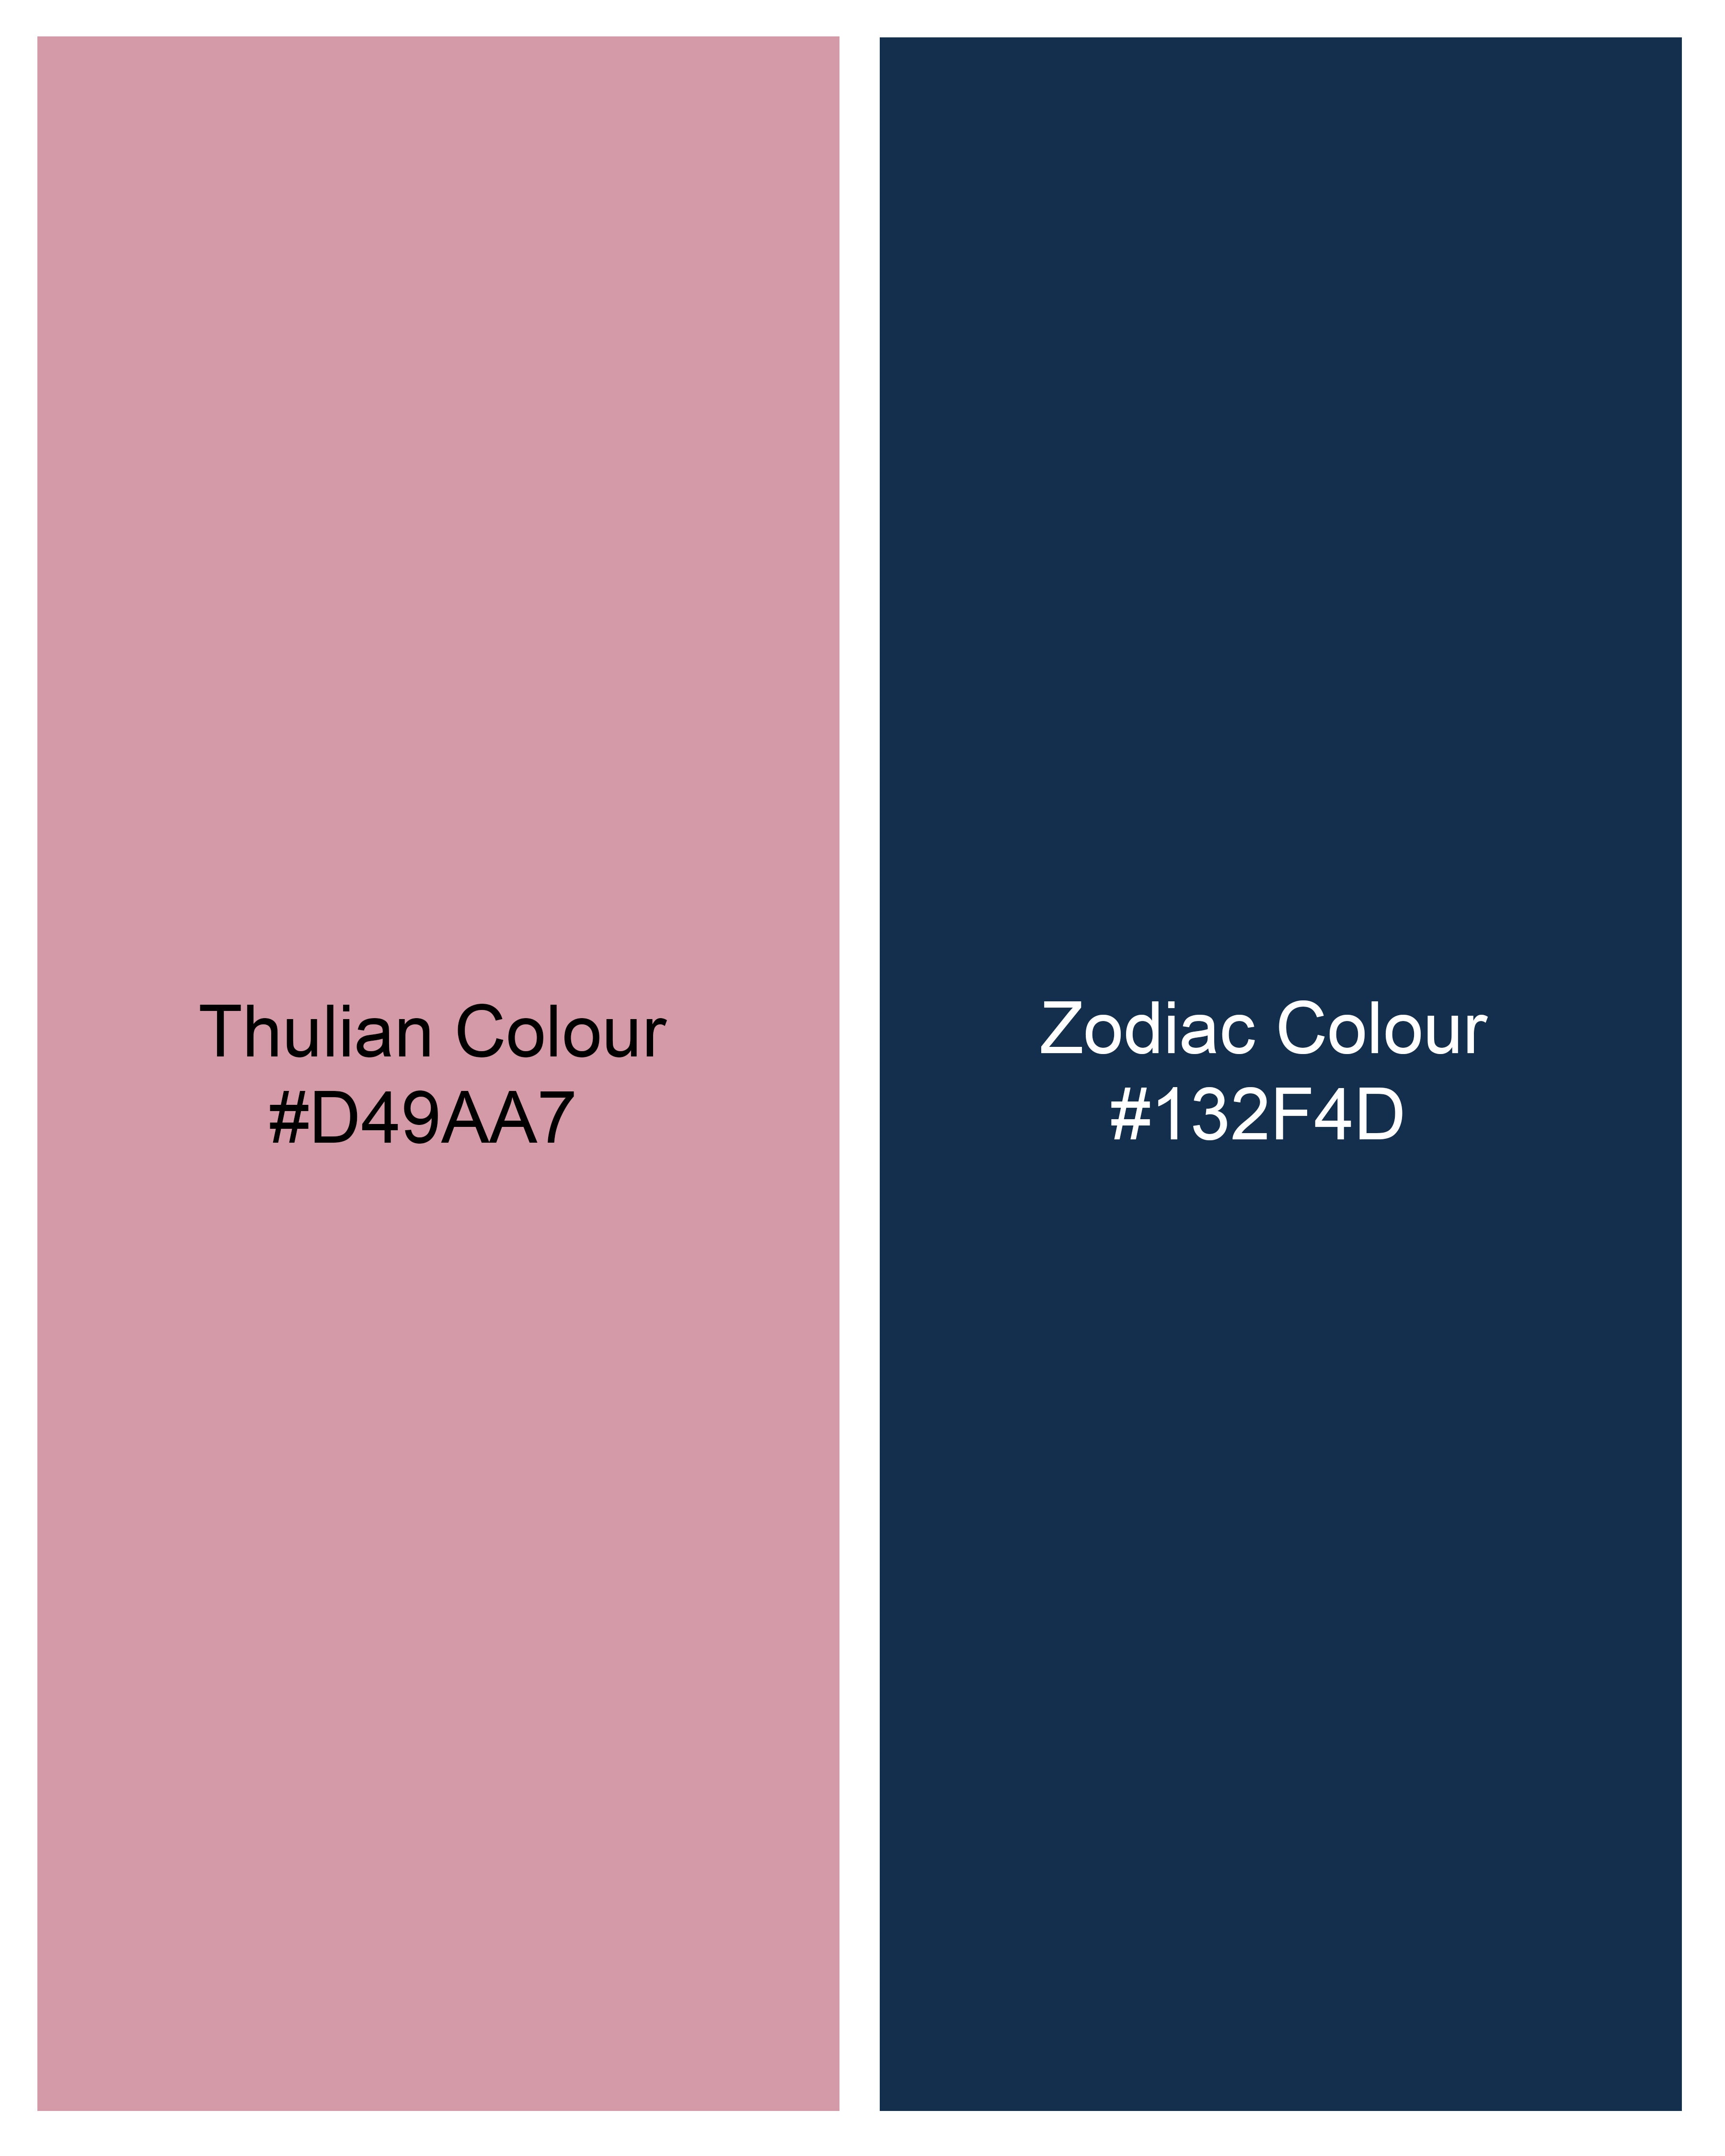 Thulian Pink Embroidered Royal Oxford Shirt 7896-BD-BLK-E070-38, 7896-BD-BLK-E070-H-38, 7896-BD-BLK-E070-39, 7896-BD-BLK-E070-H-39, 7896-BD-BLK-E070-40, 7896-BD-BLK-E070-H-40, 7896-BD-BLK-E070-42, 7896-BD-BLK-E070-H-42, 7896-BD-BLK-E070-44, 7896-BD-BLK-E070-H-44, 7896-BD-BLK-E070-46, 7896-BD-BLK-E070-H-46, 7896-BD-BLK-E070-48, 7896-BD-BLK-E070-H-48, 7896-BD-BLK-E070-50, 7896-BD-BLK-E070-H-50, 7896-BD-BLK-E070-52, 7896-BD-BLK-E070-H-52